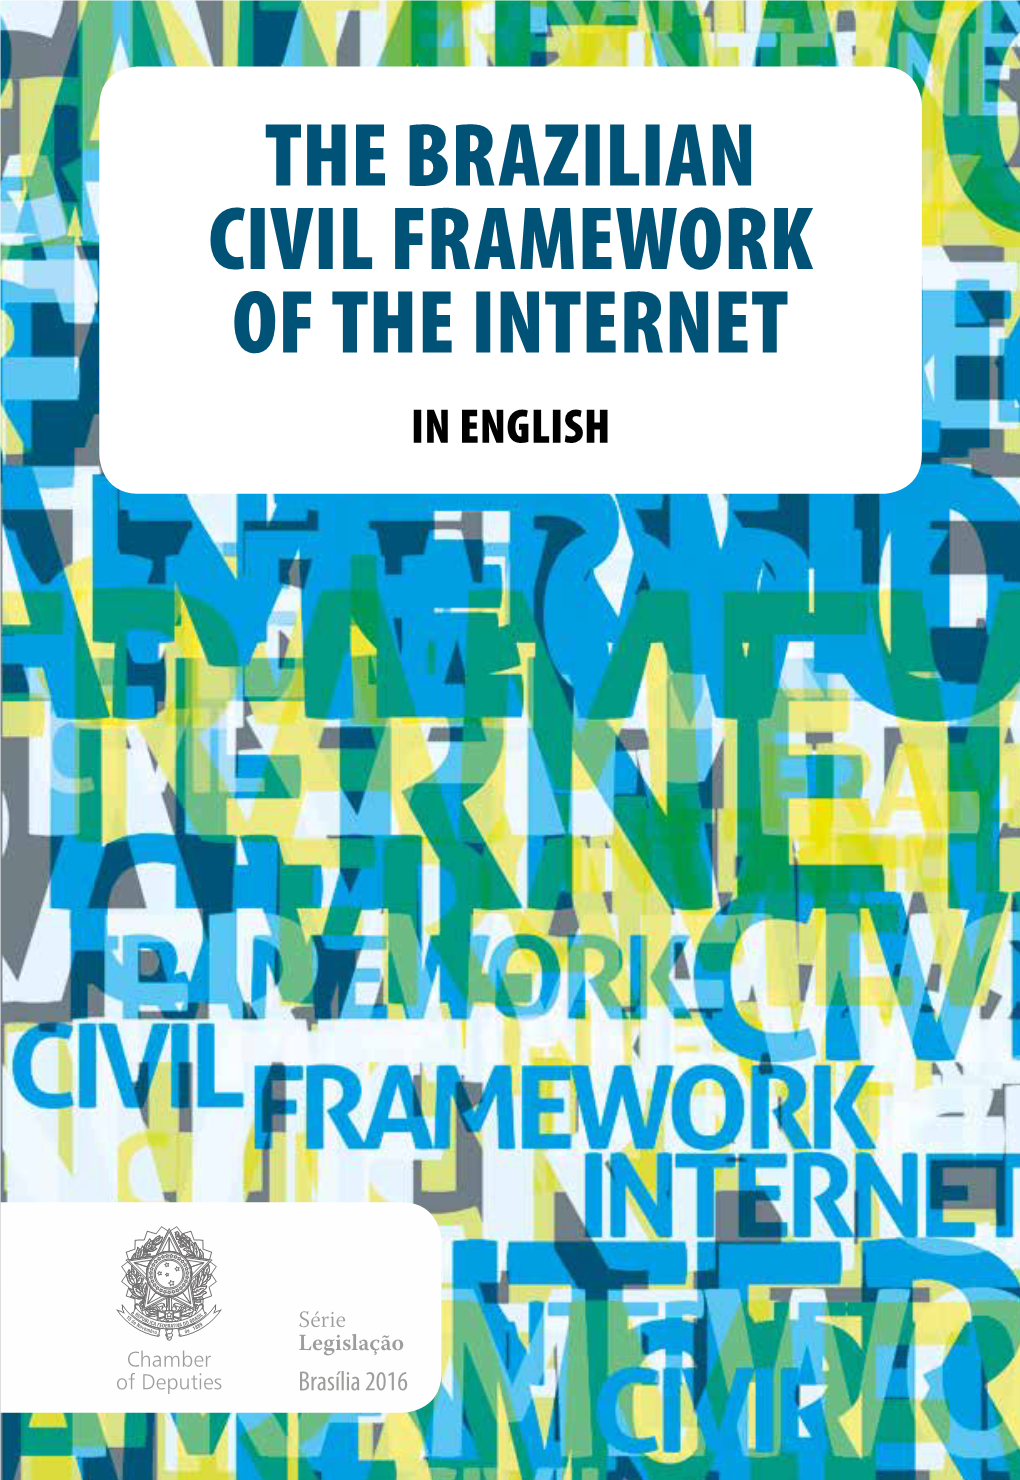 The Brazilian Civil Framework of the Internet in English